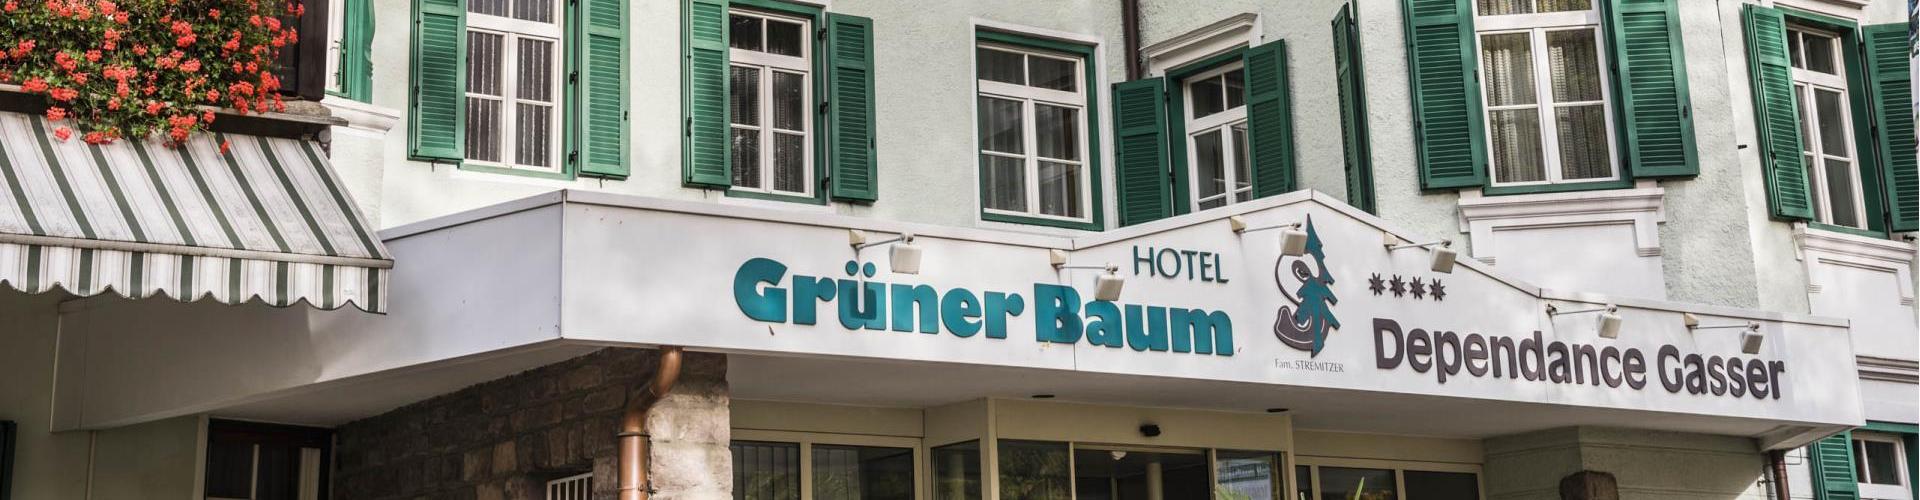 gruenerbaum-hotel-2182